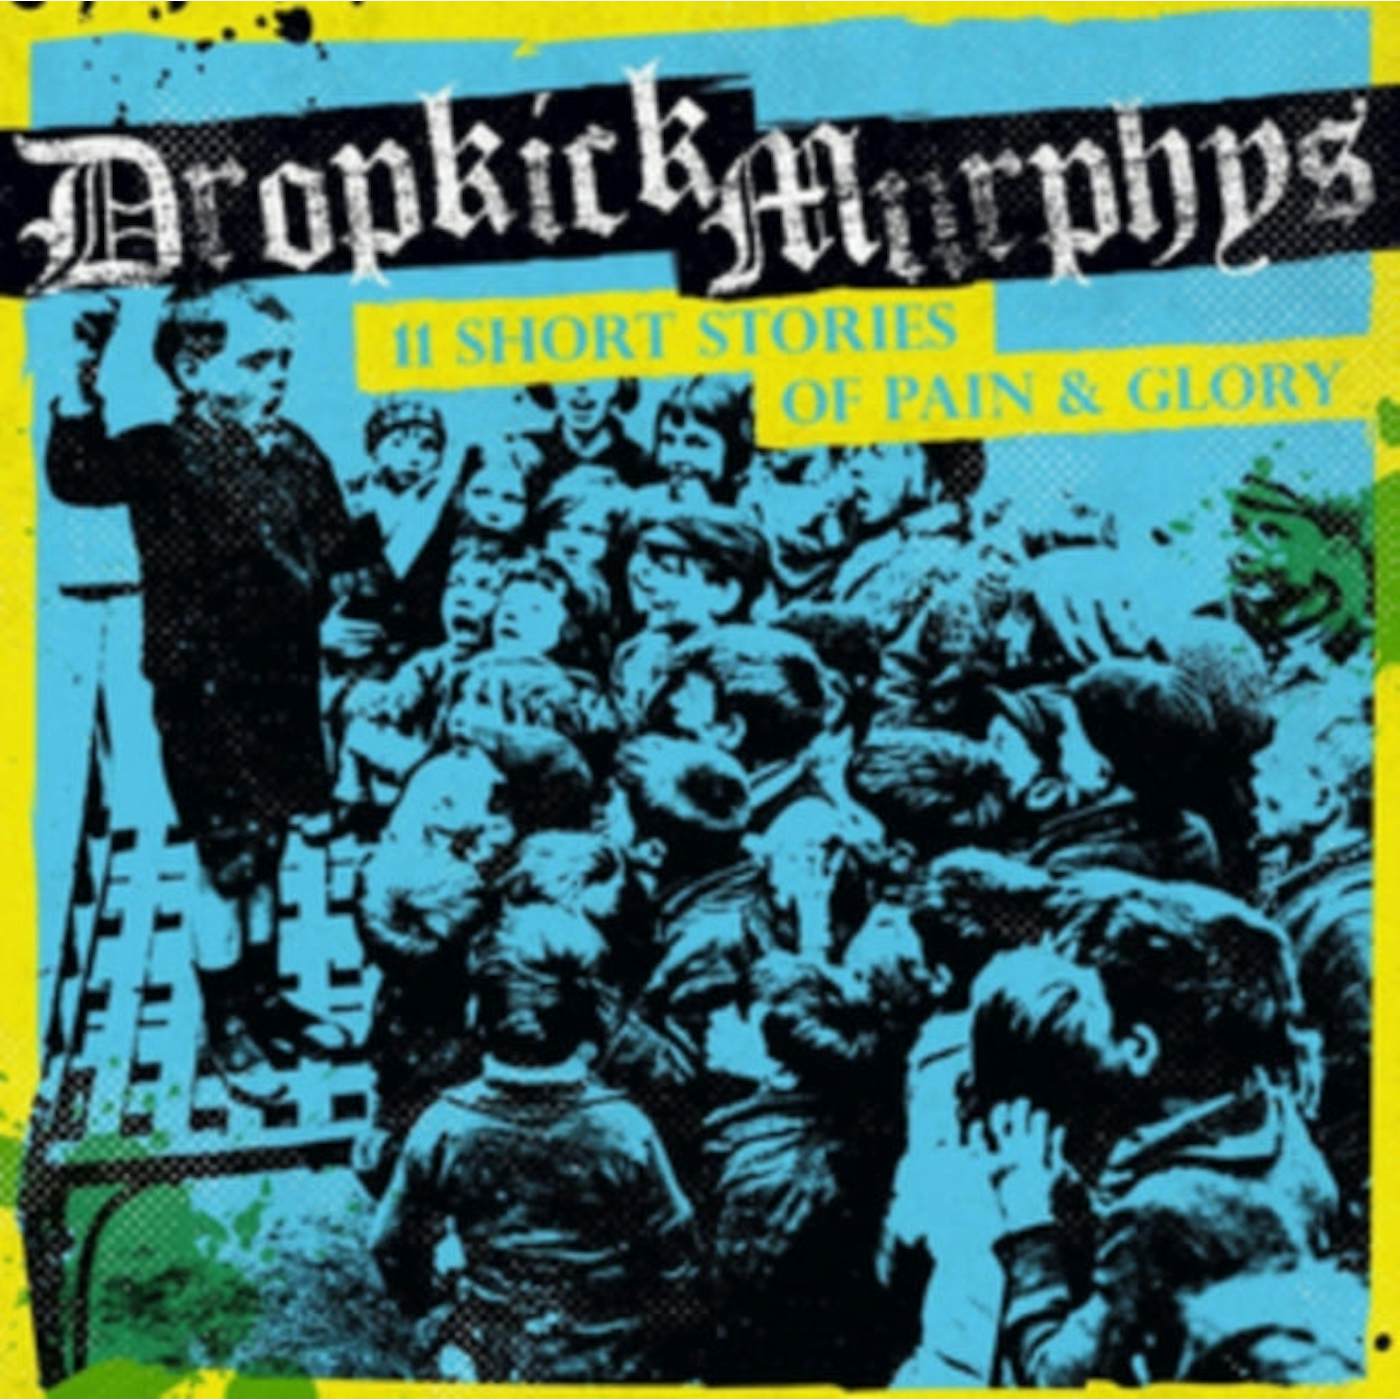 The Dropkick Murphys LP Vinyl Record - 11  Short Stories Of Pain & Glory